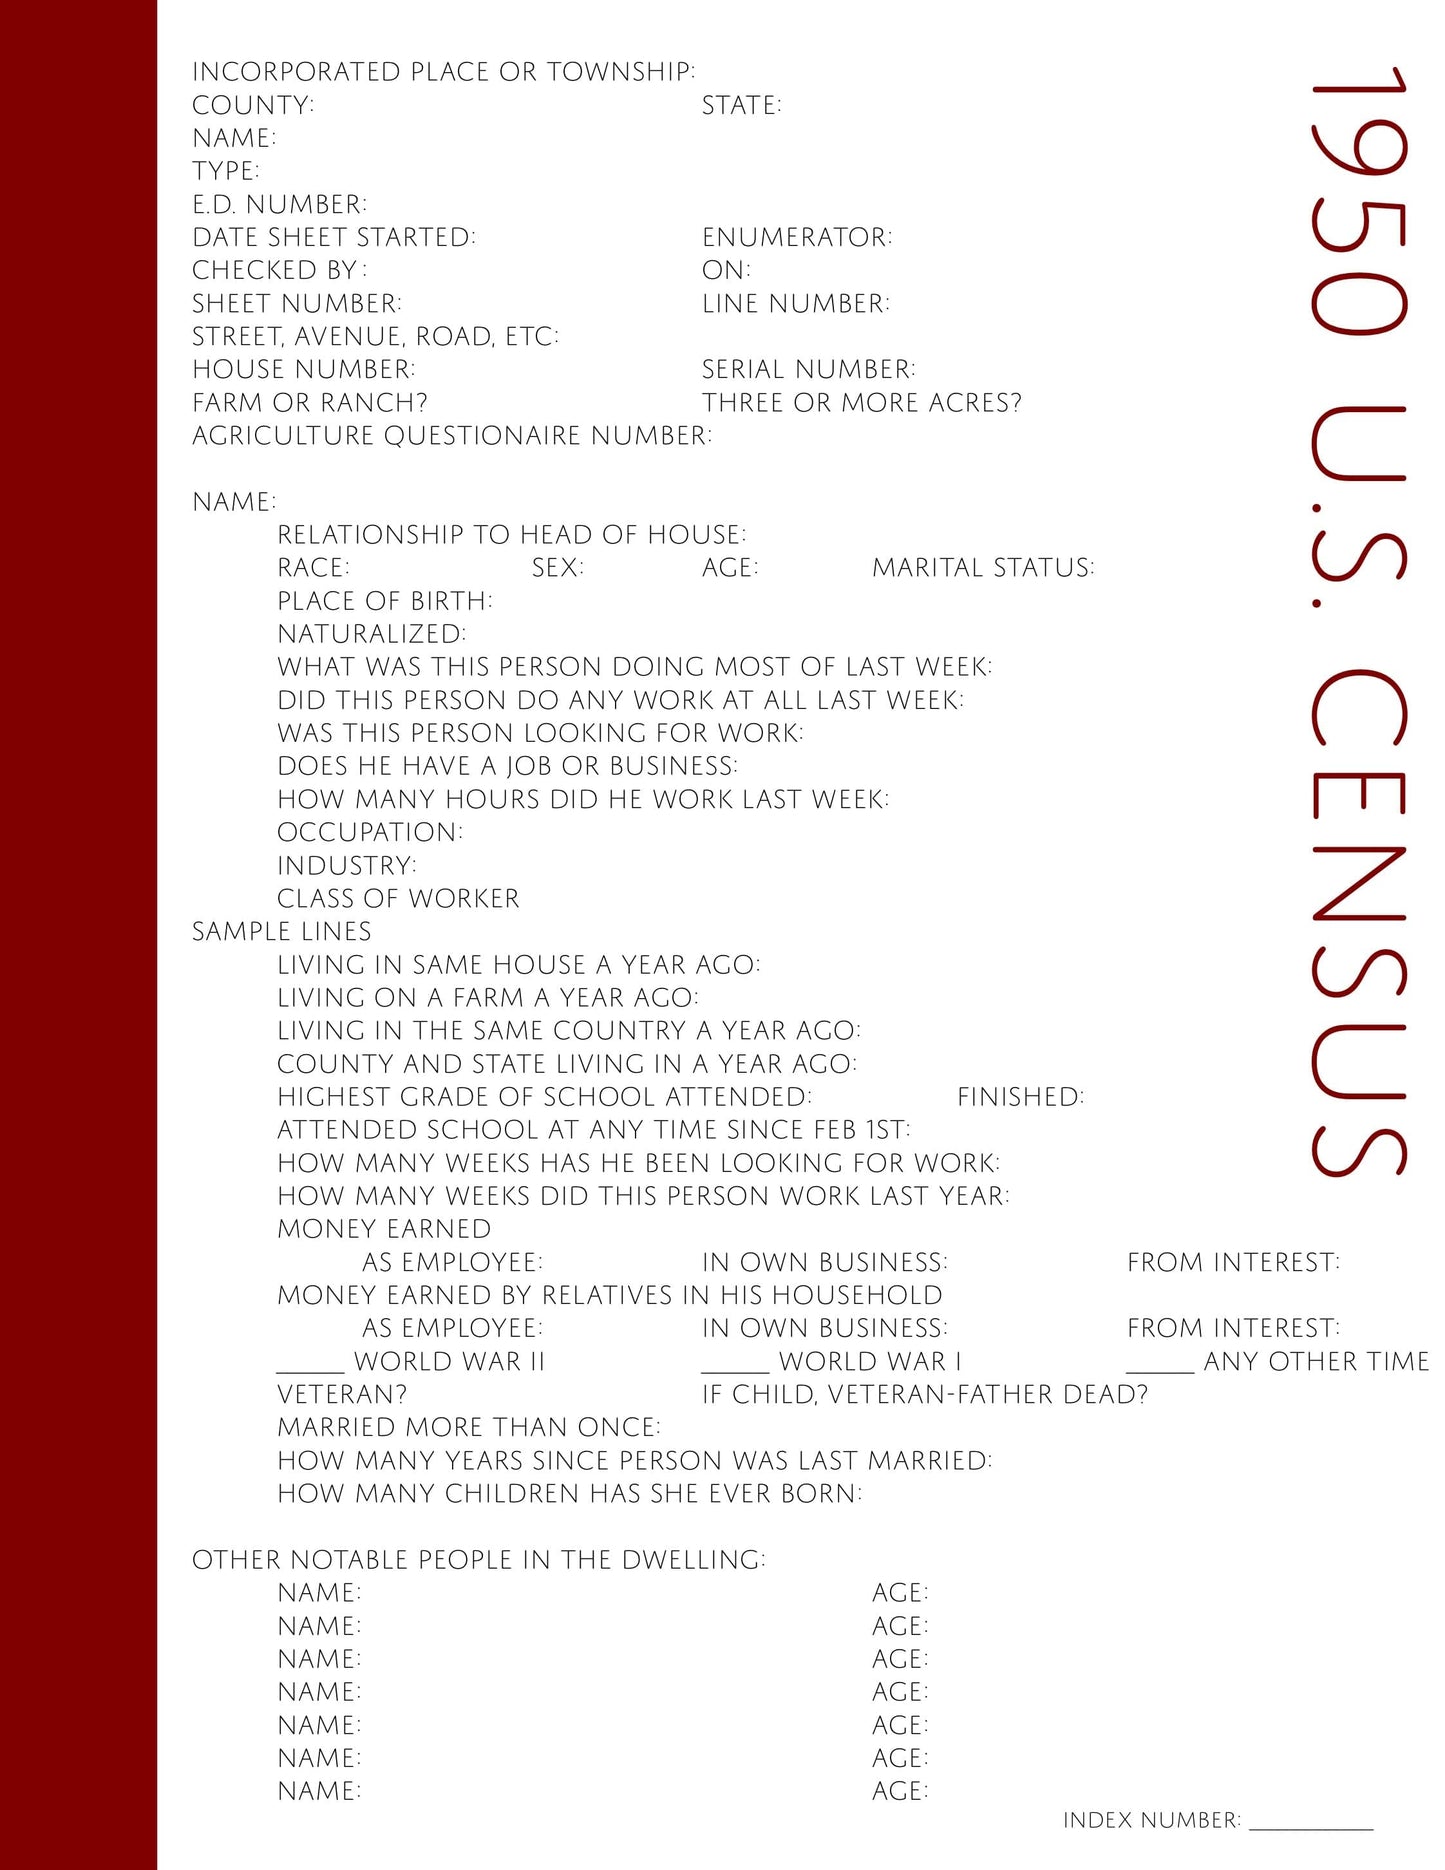 1950 Census Bundle: Printable Genealogy Forms (Digital Download)